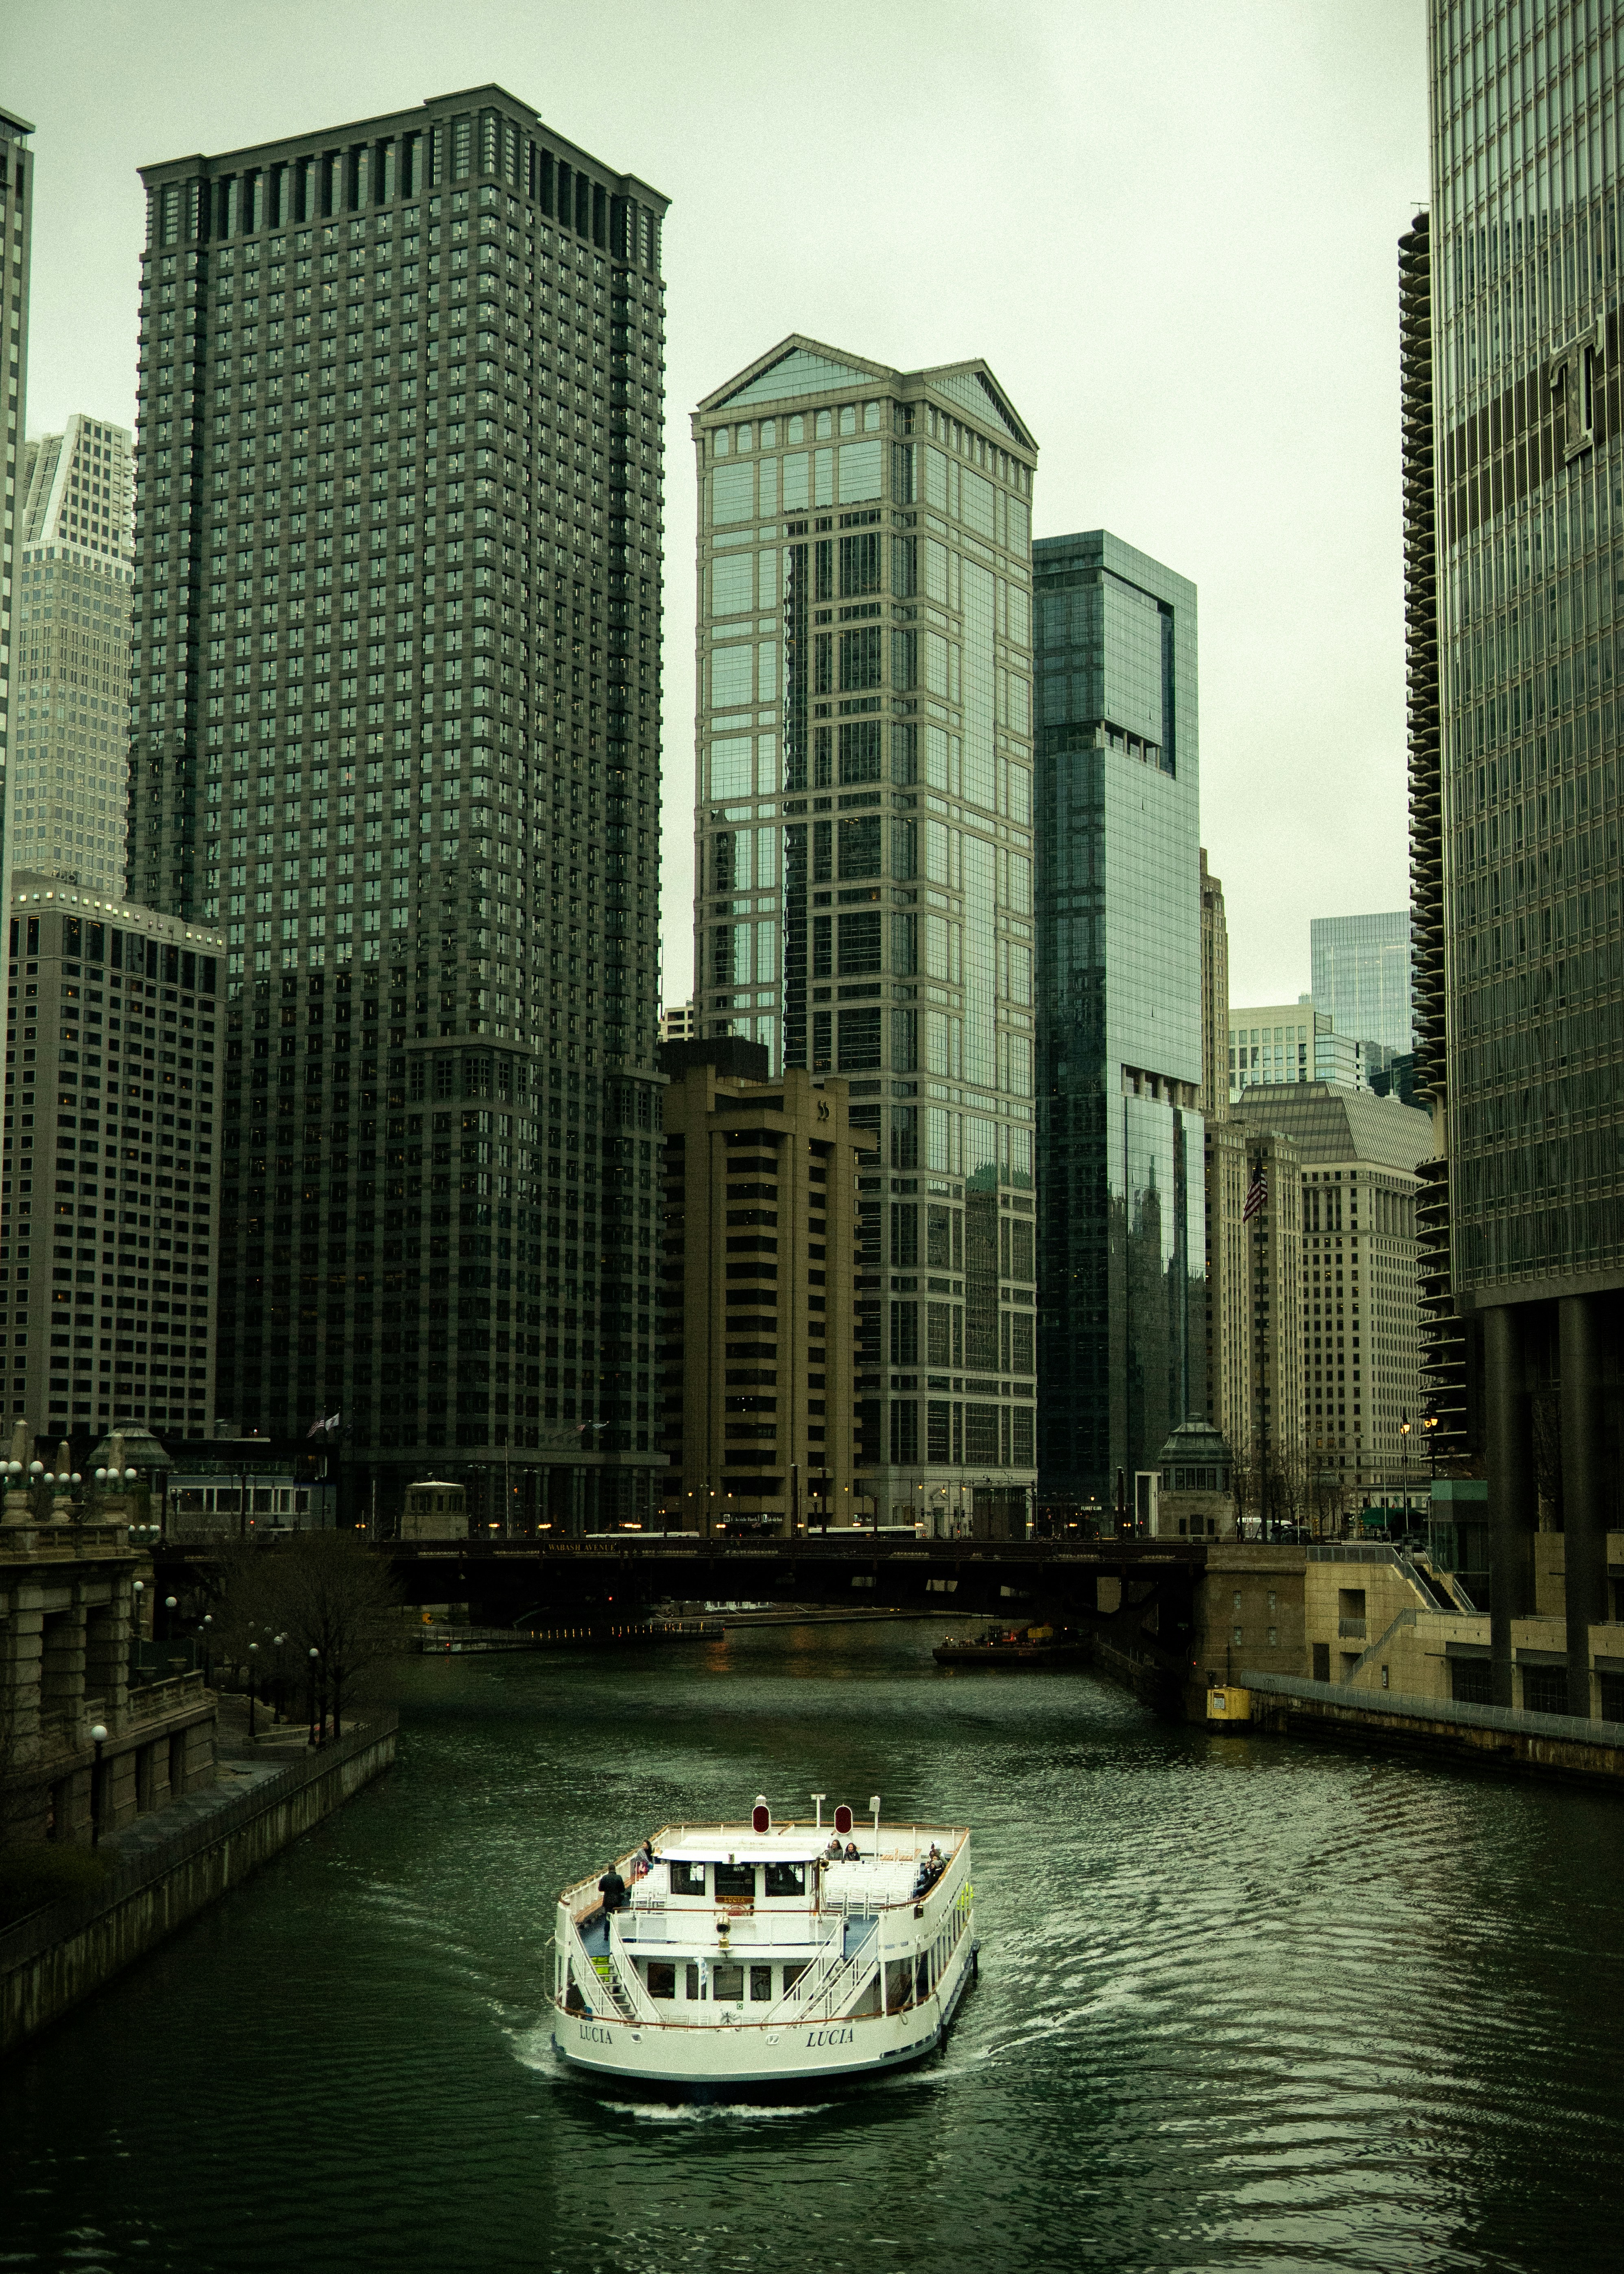 Chicago Riverwalk Boating Tour